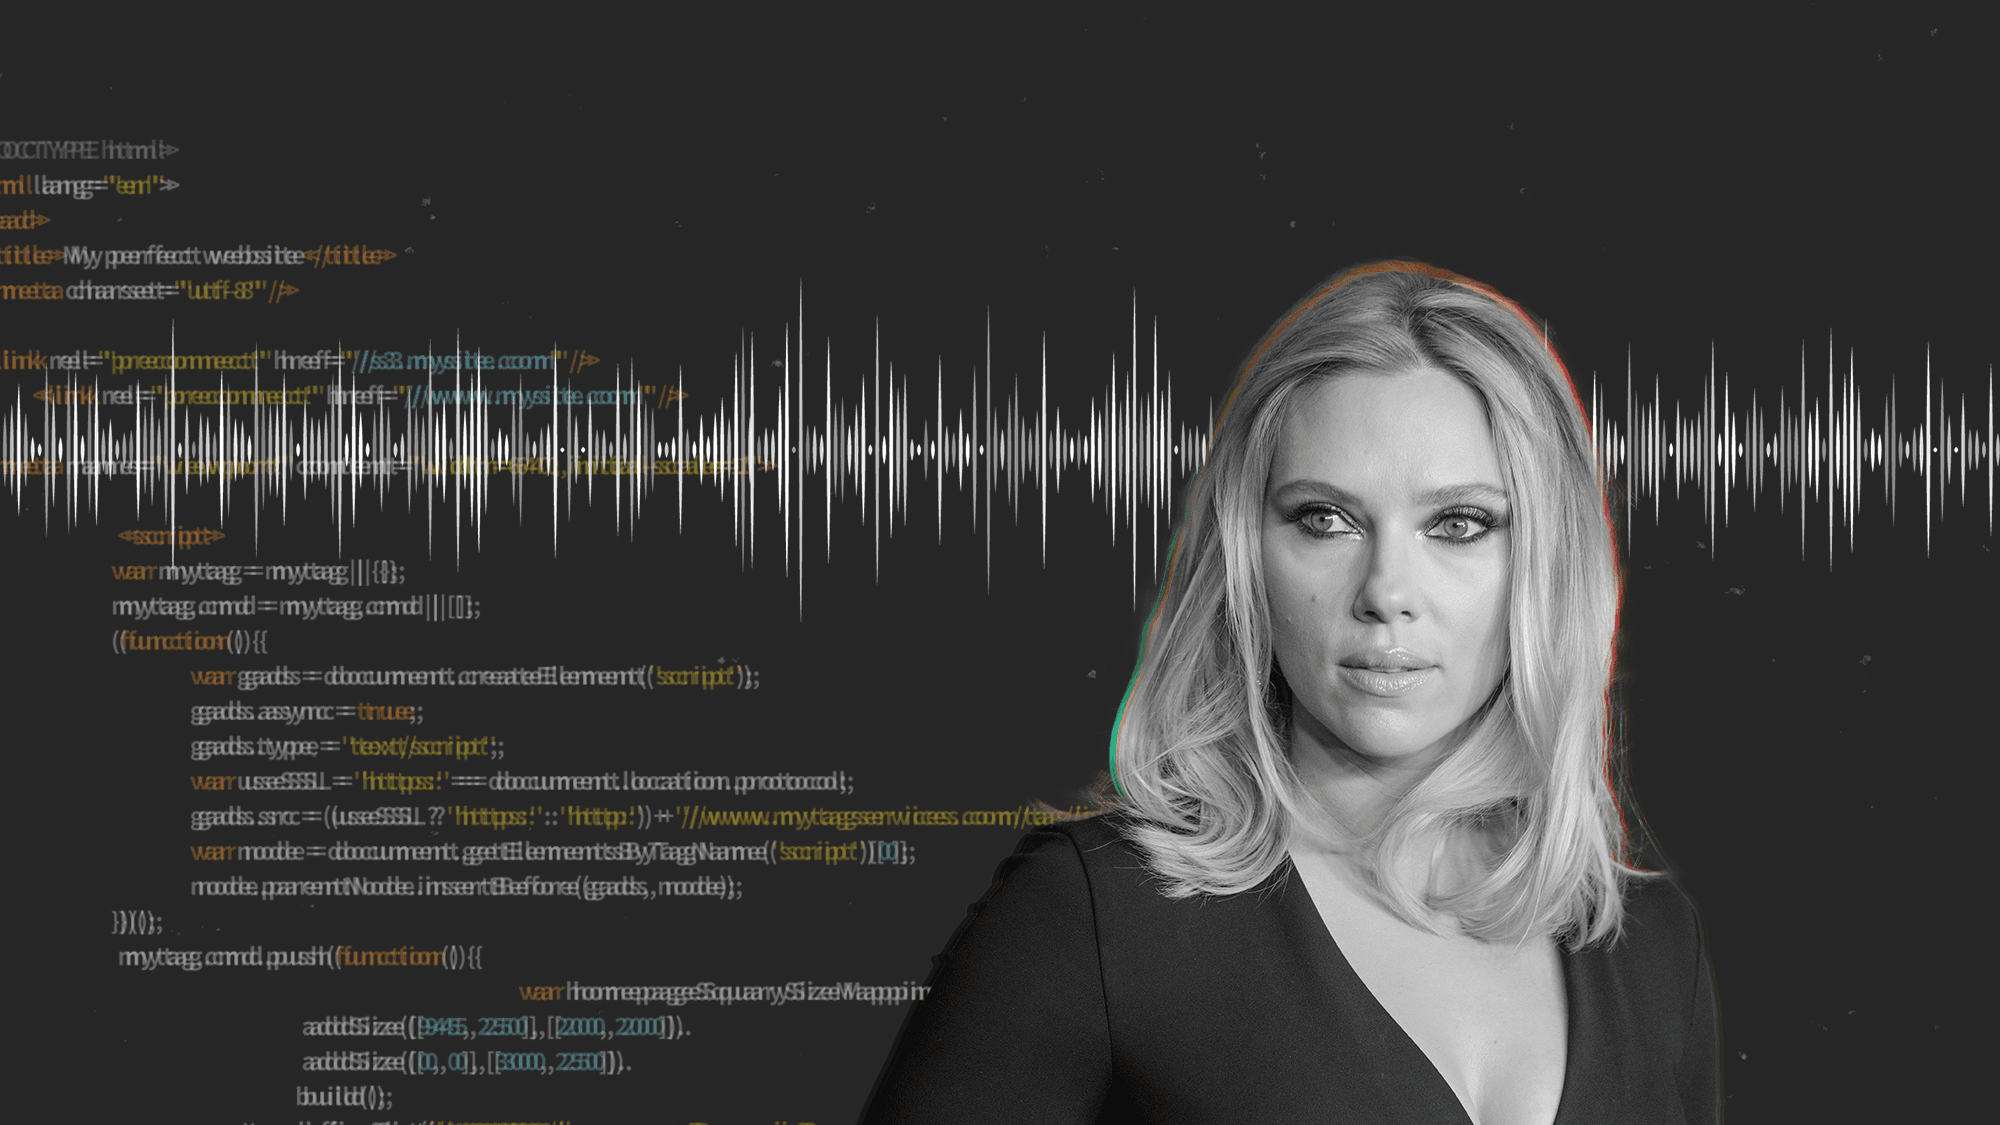 Image Scarlett Johansson Opens the Debate on AI Consent